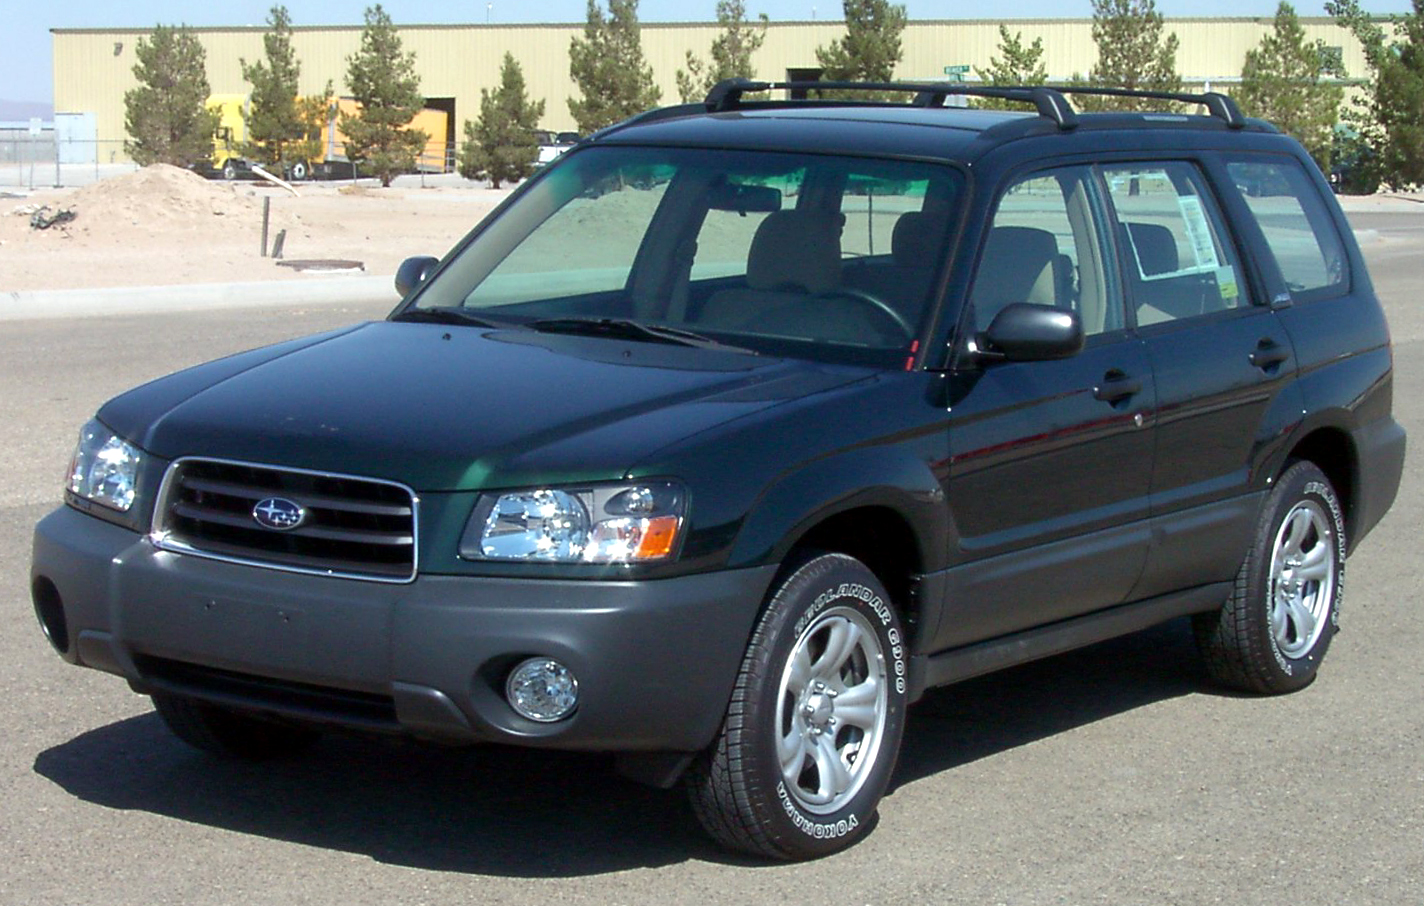 2003 Subaru Forester Information and photos MOMENTcar